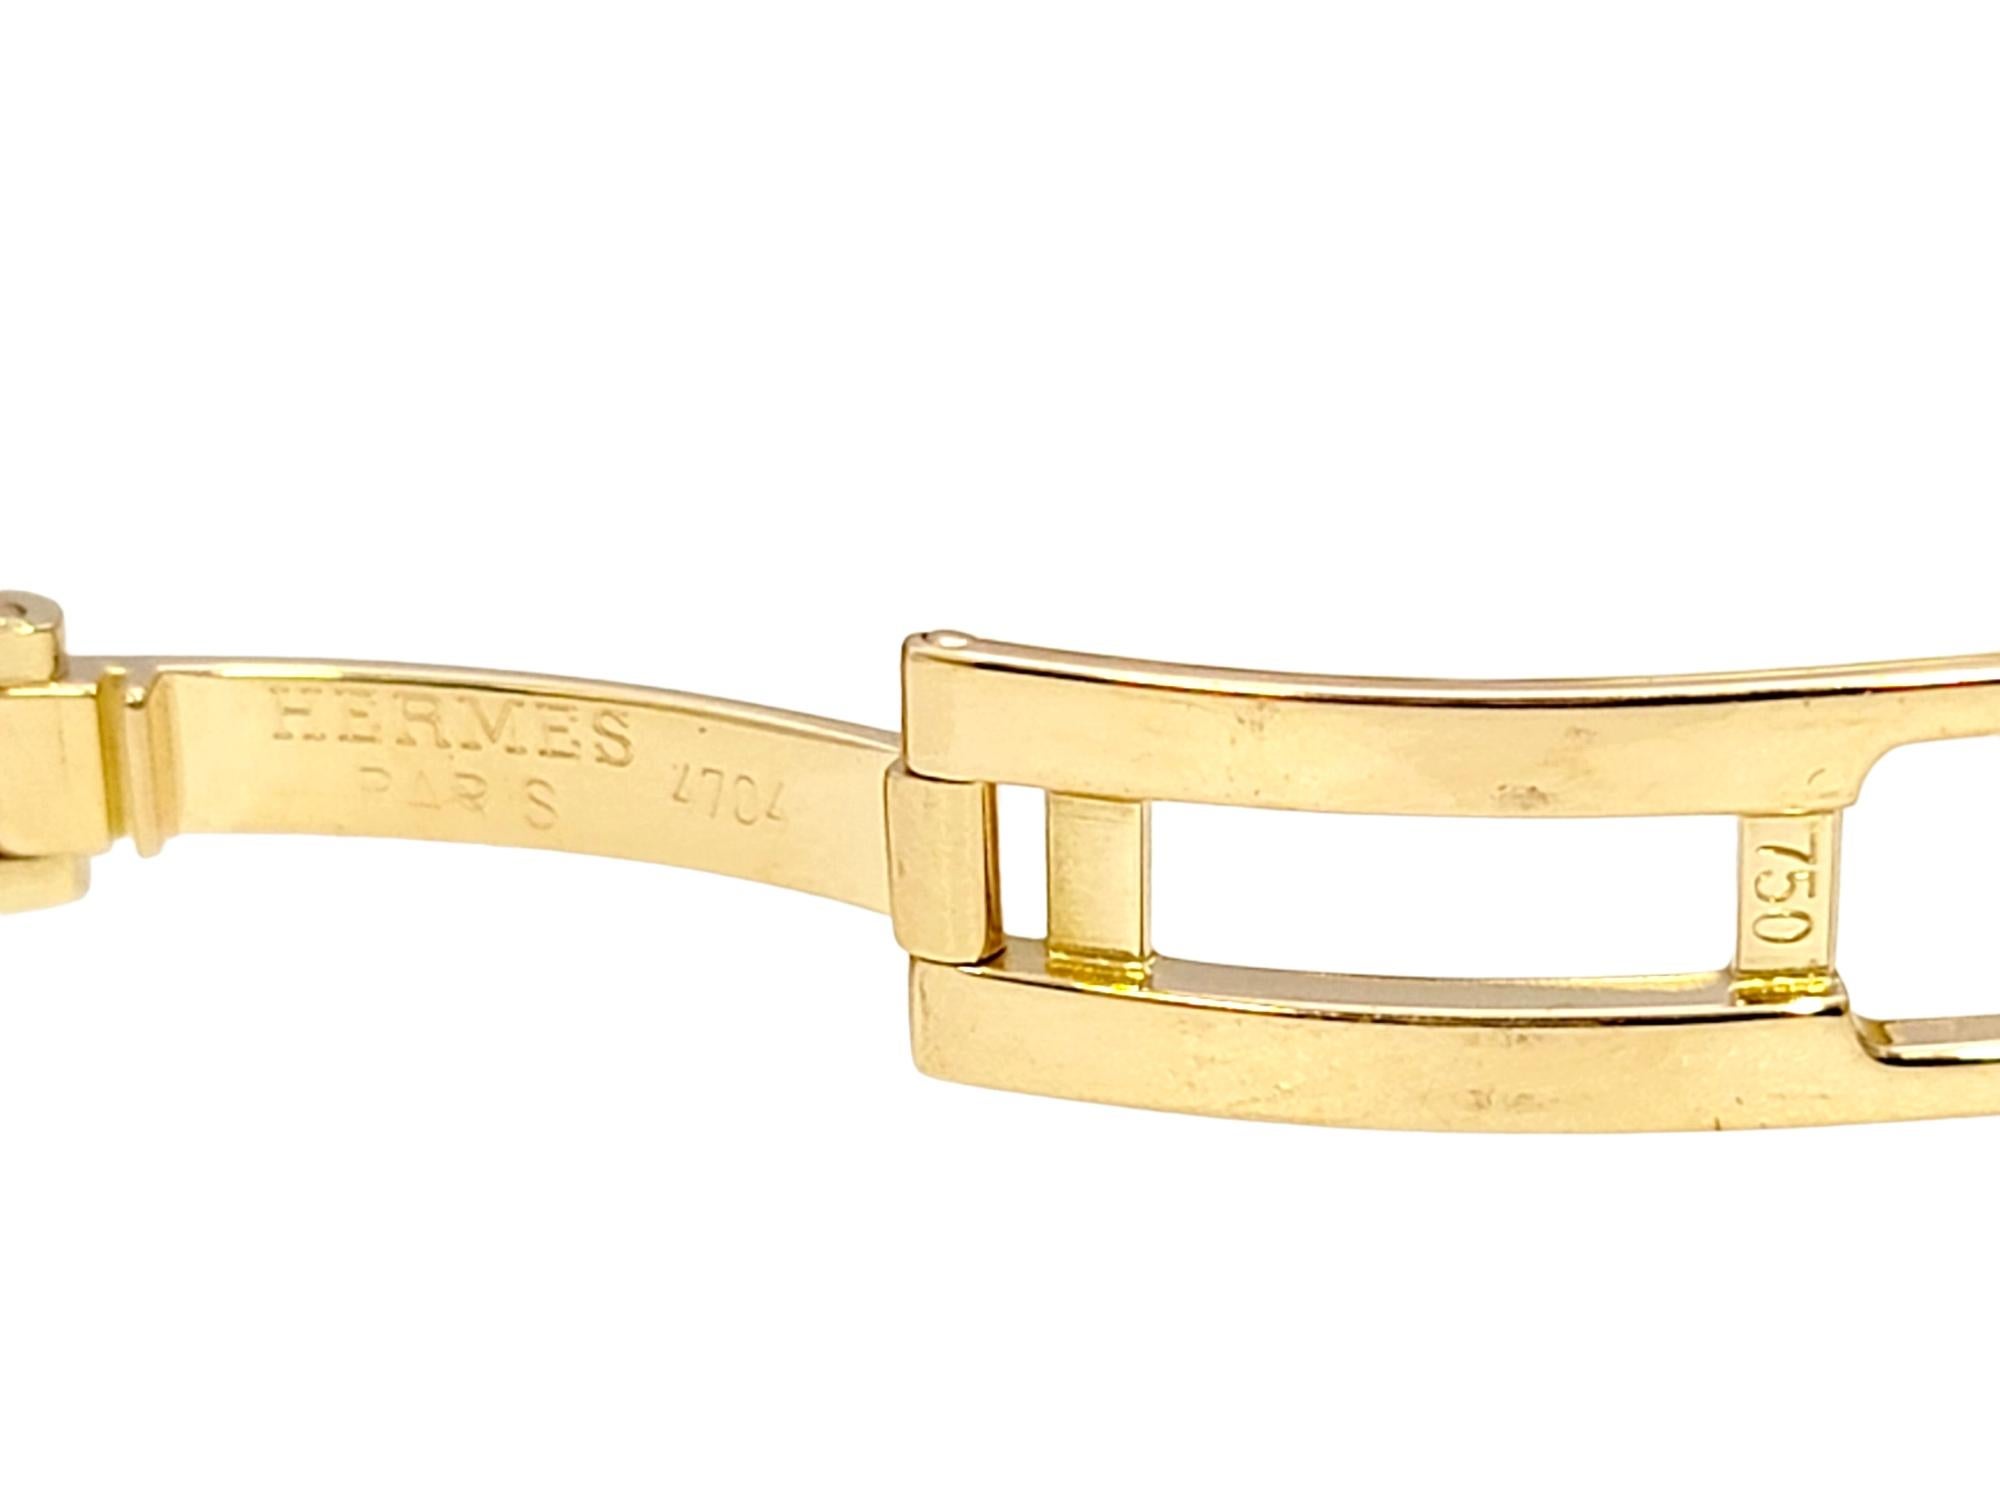 Hermes Cape Cod Automatic Wristwatch 18 Karat Yellow Gold 31 Mm Rectangular Case For Sale 3